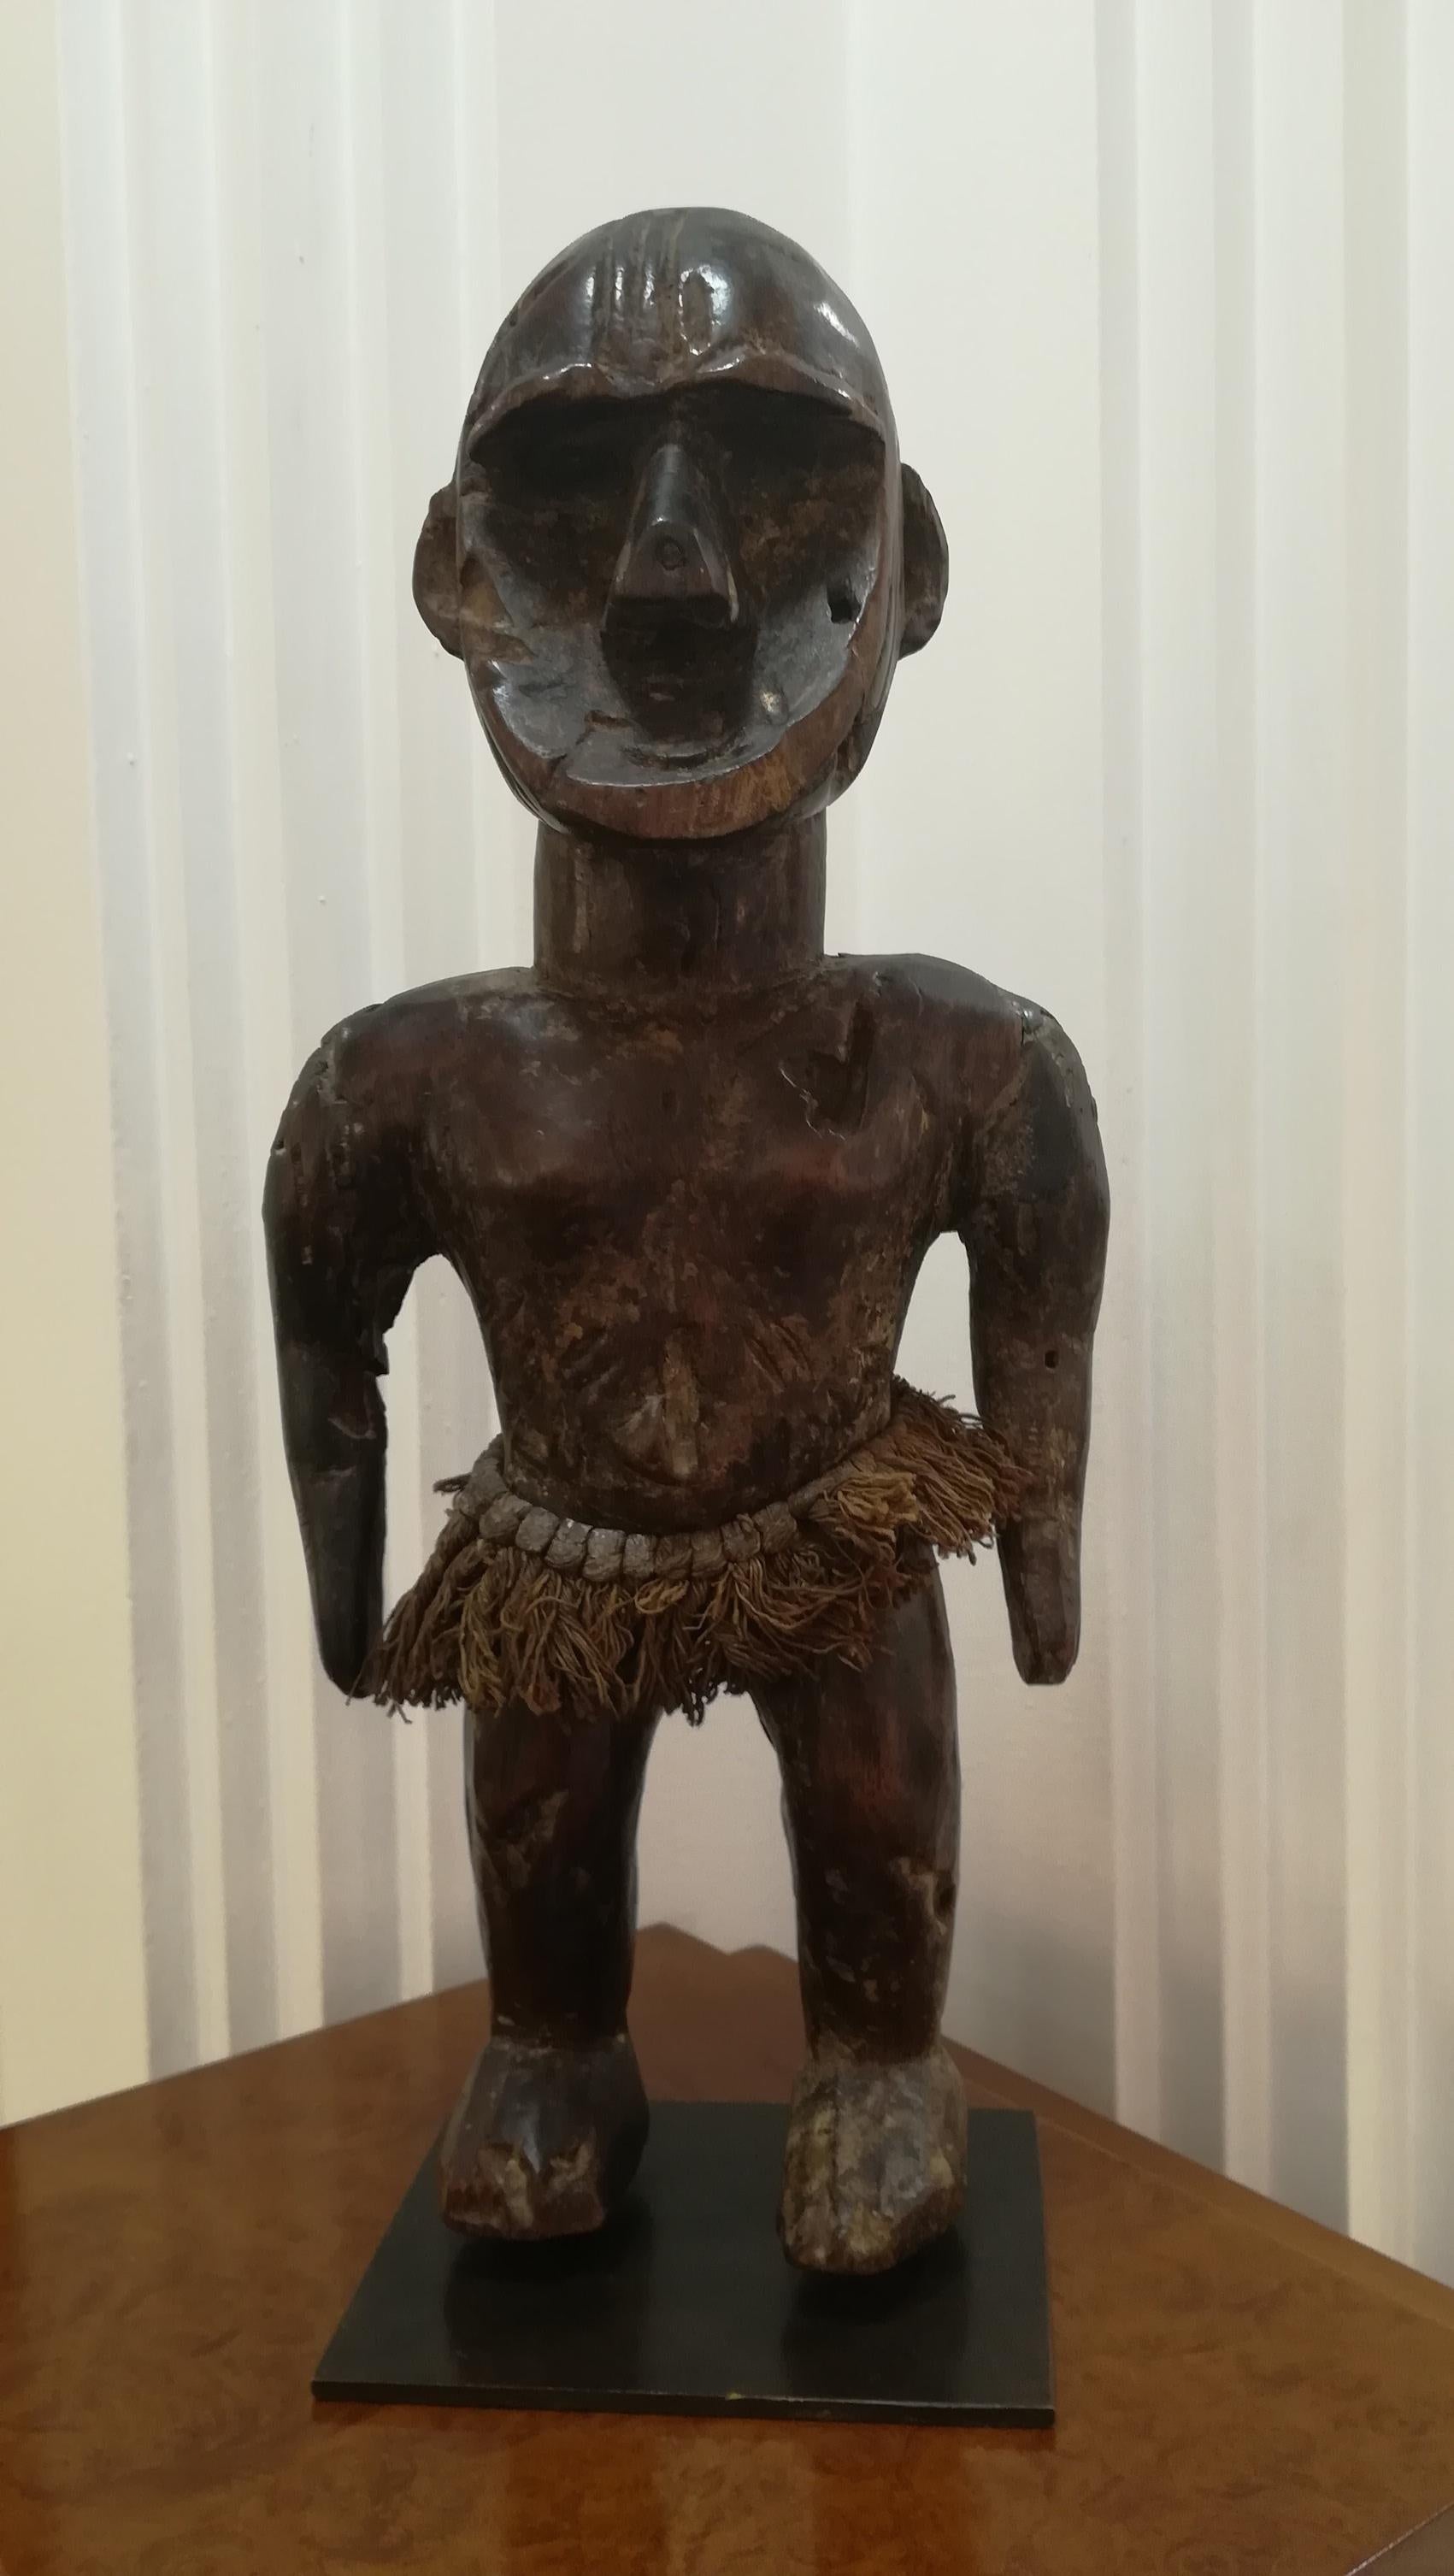 Toma sculpture, Sierra Leone, beginning of 20th century.
Provenance: Collection Stéphane Martin, collection Alain de Monbrison.